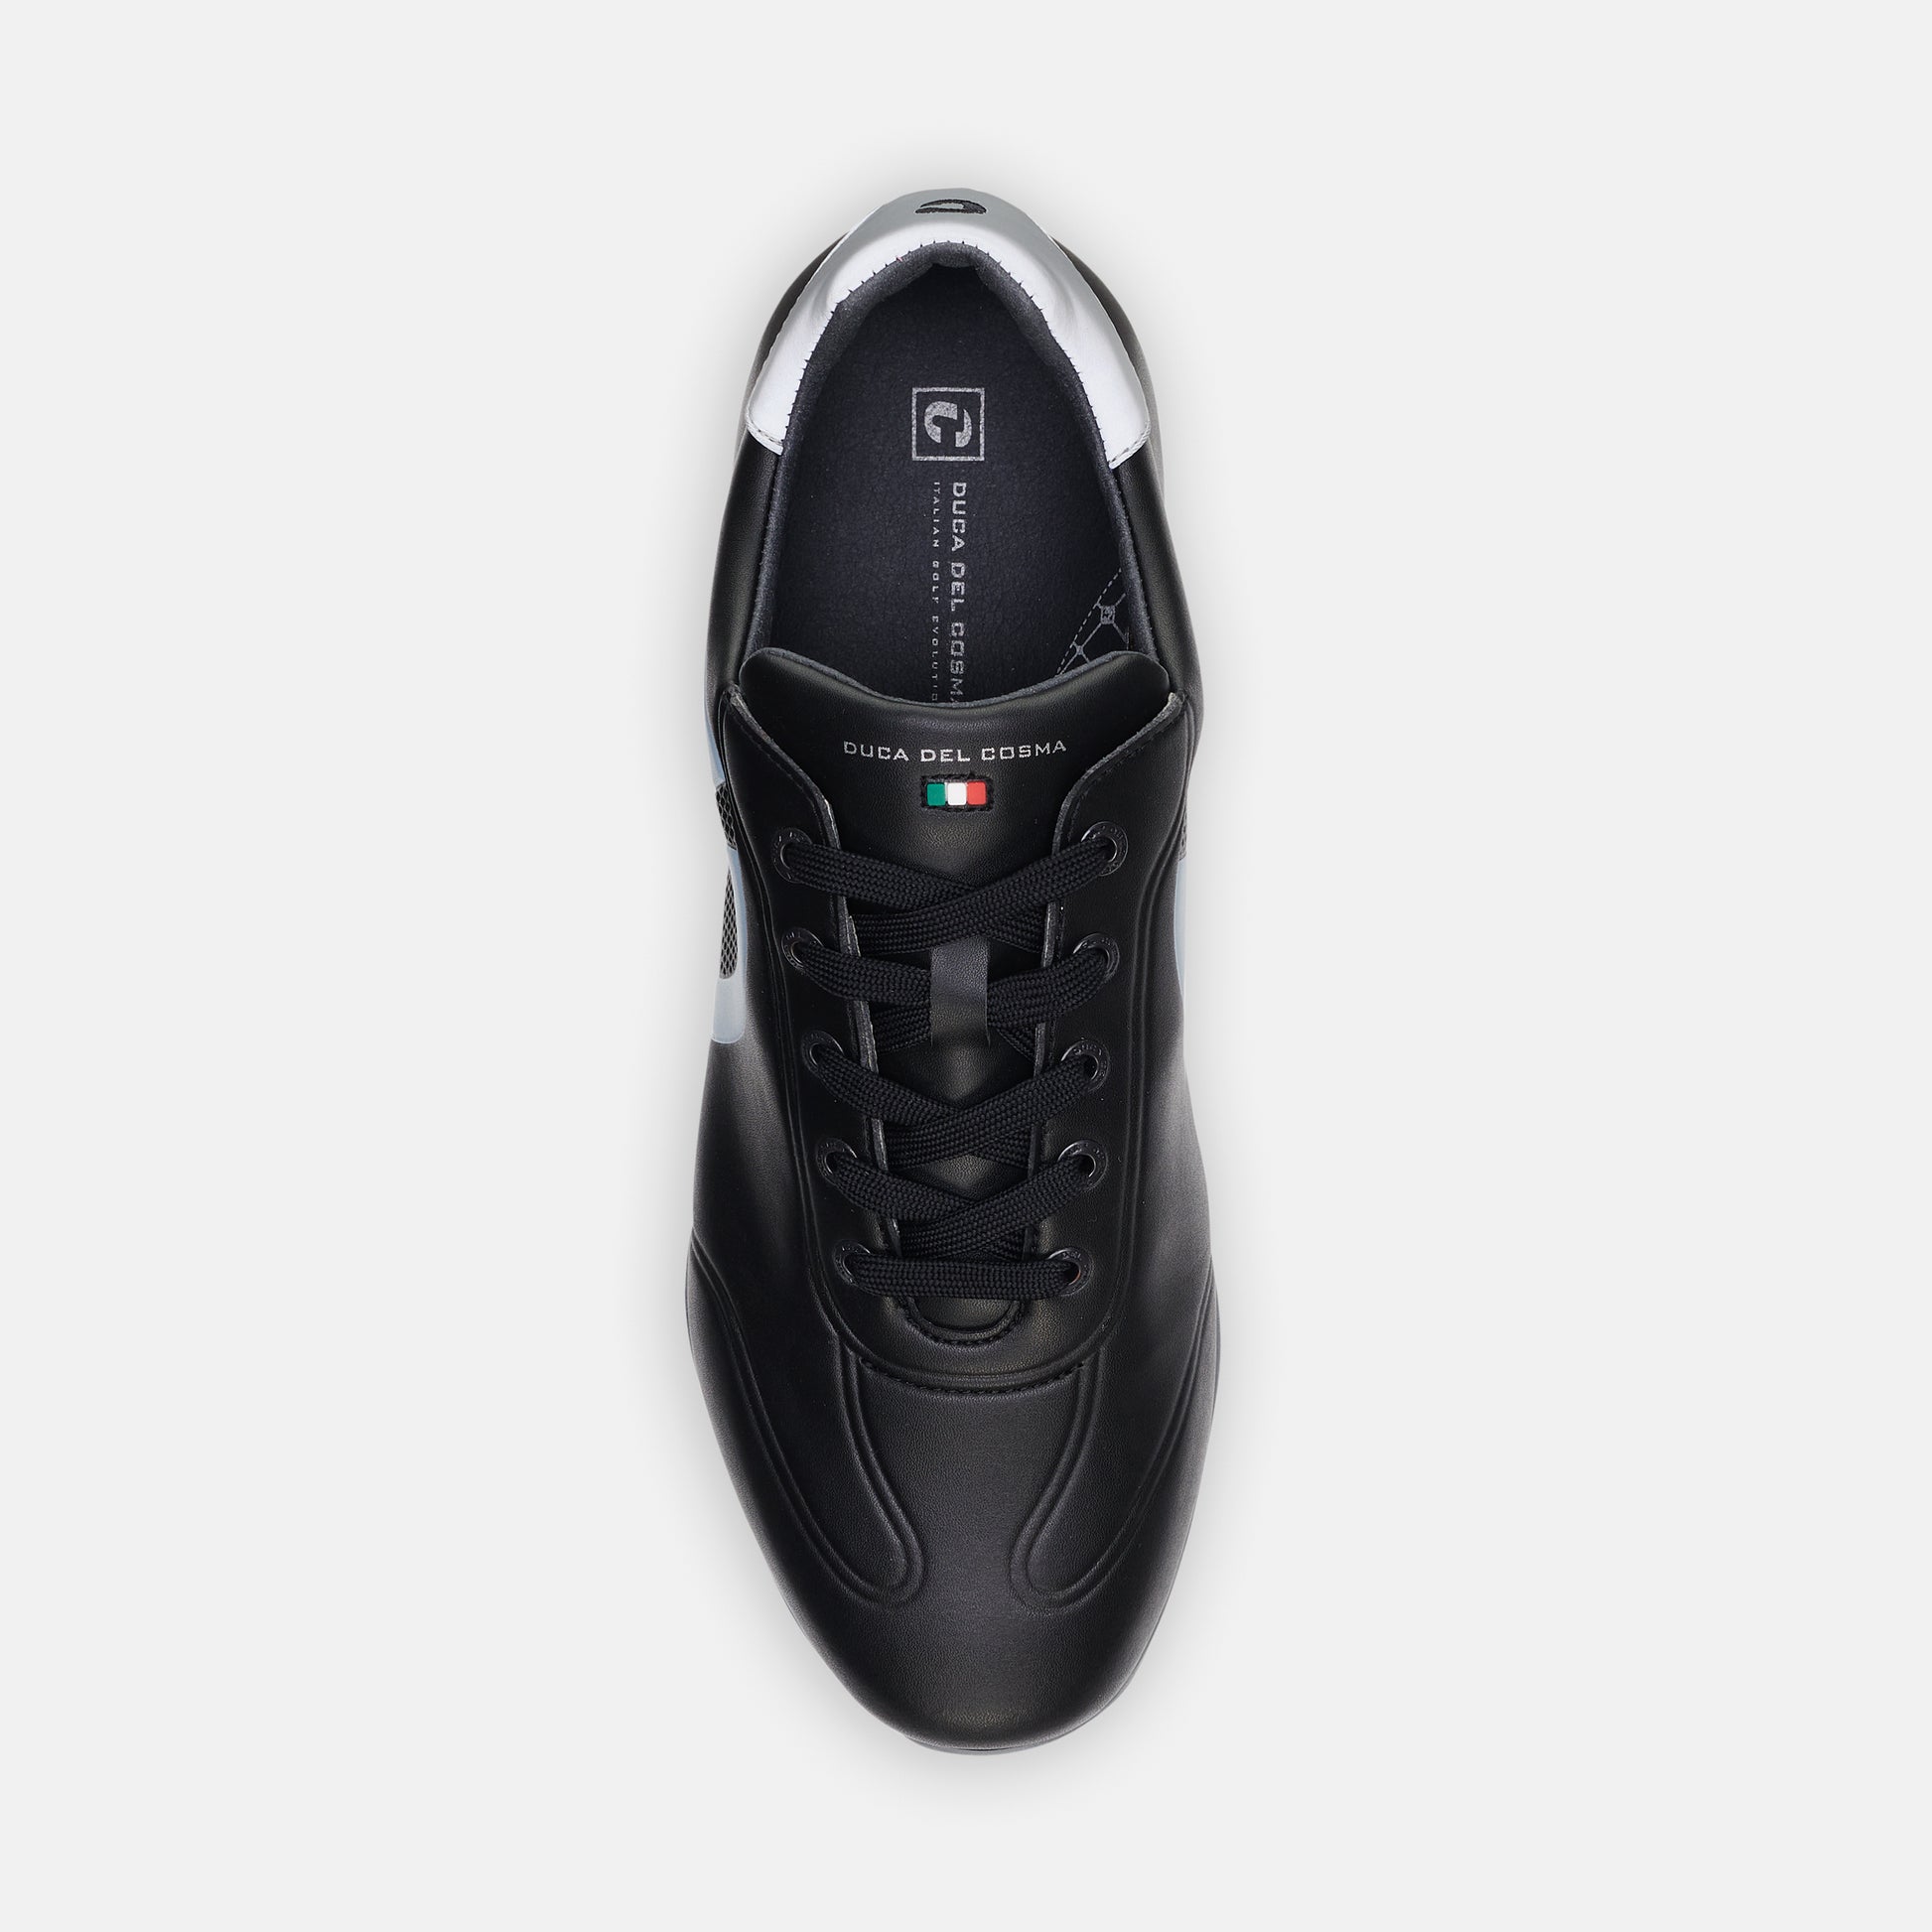 Kingscup Black Men's Golf Shoe